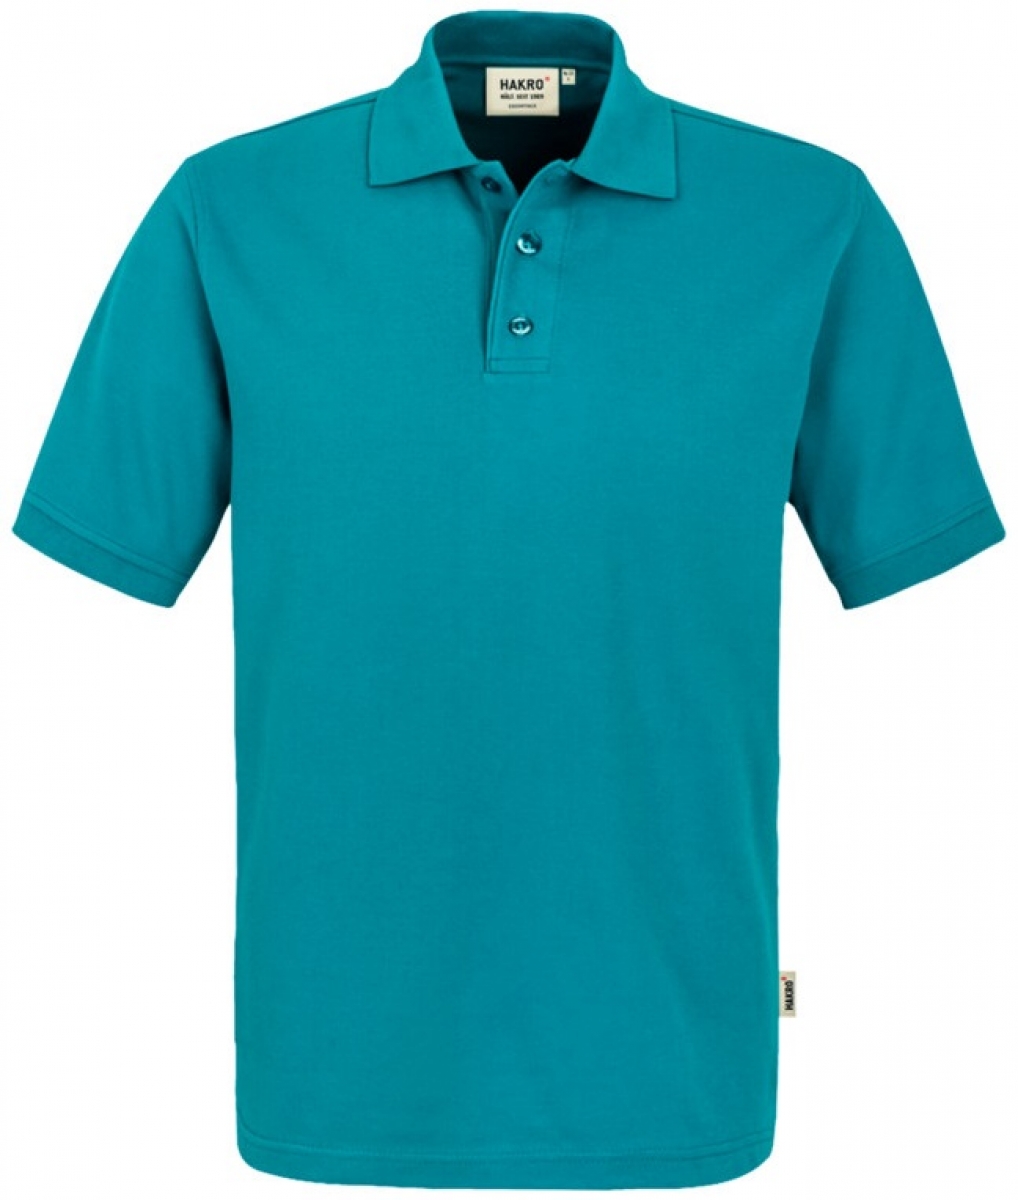 HAKRO-Worker-Shirts, Poloshirt Top, smaragd